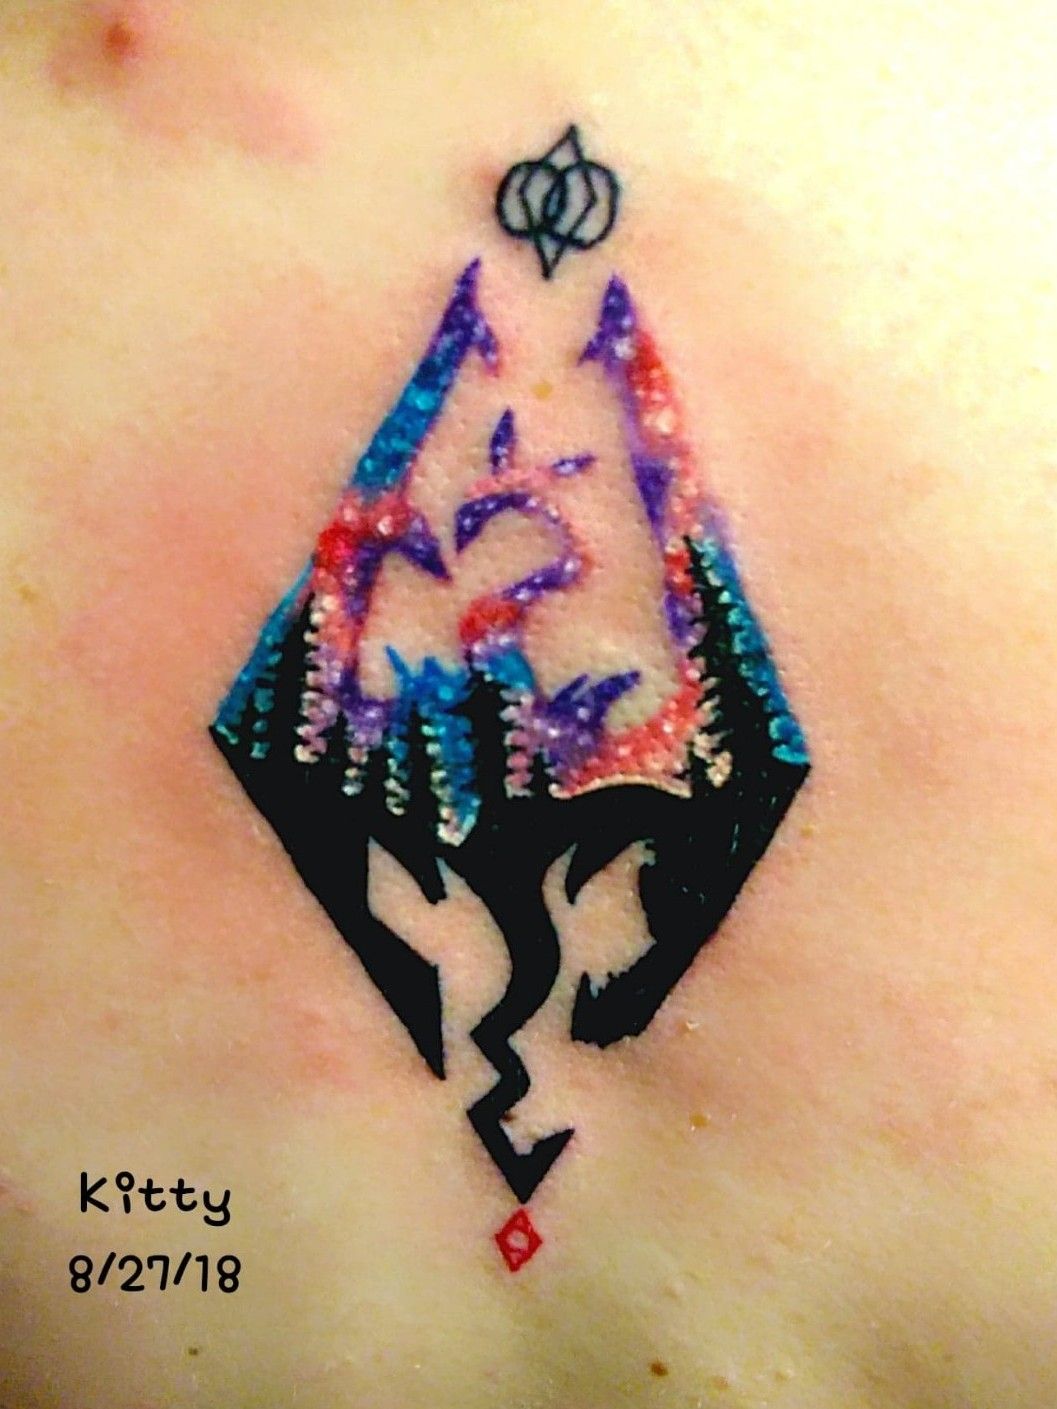 My Skyrim Tattoo by DarqueDraconian on DeviantArt